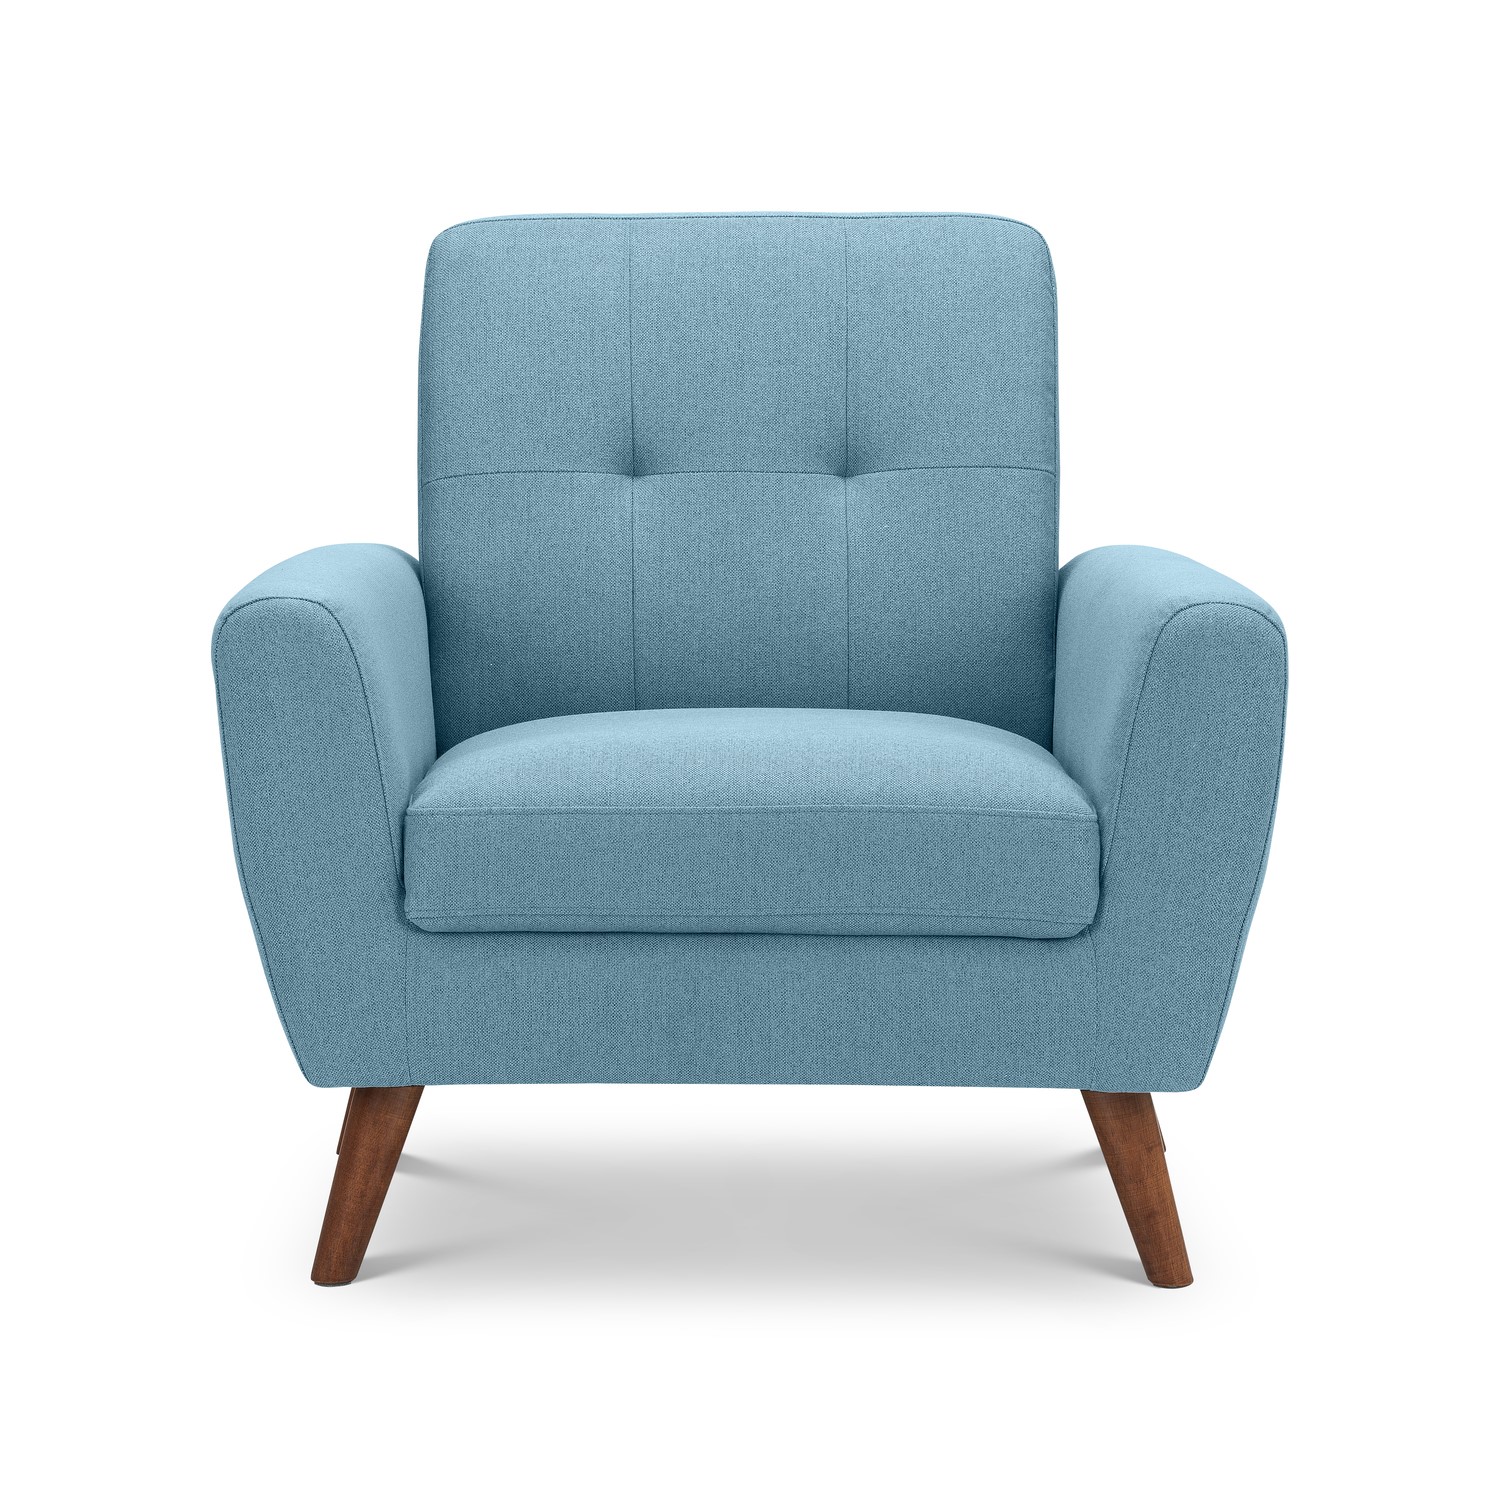 Read more about Blue fabric armchair with wooden legs monza julian bowen